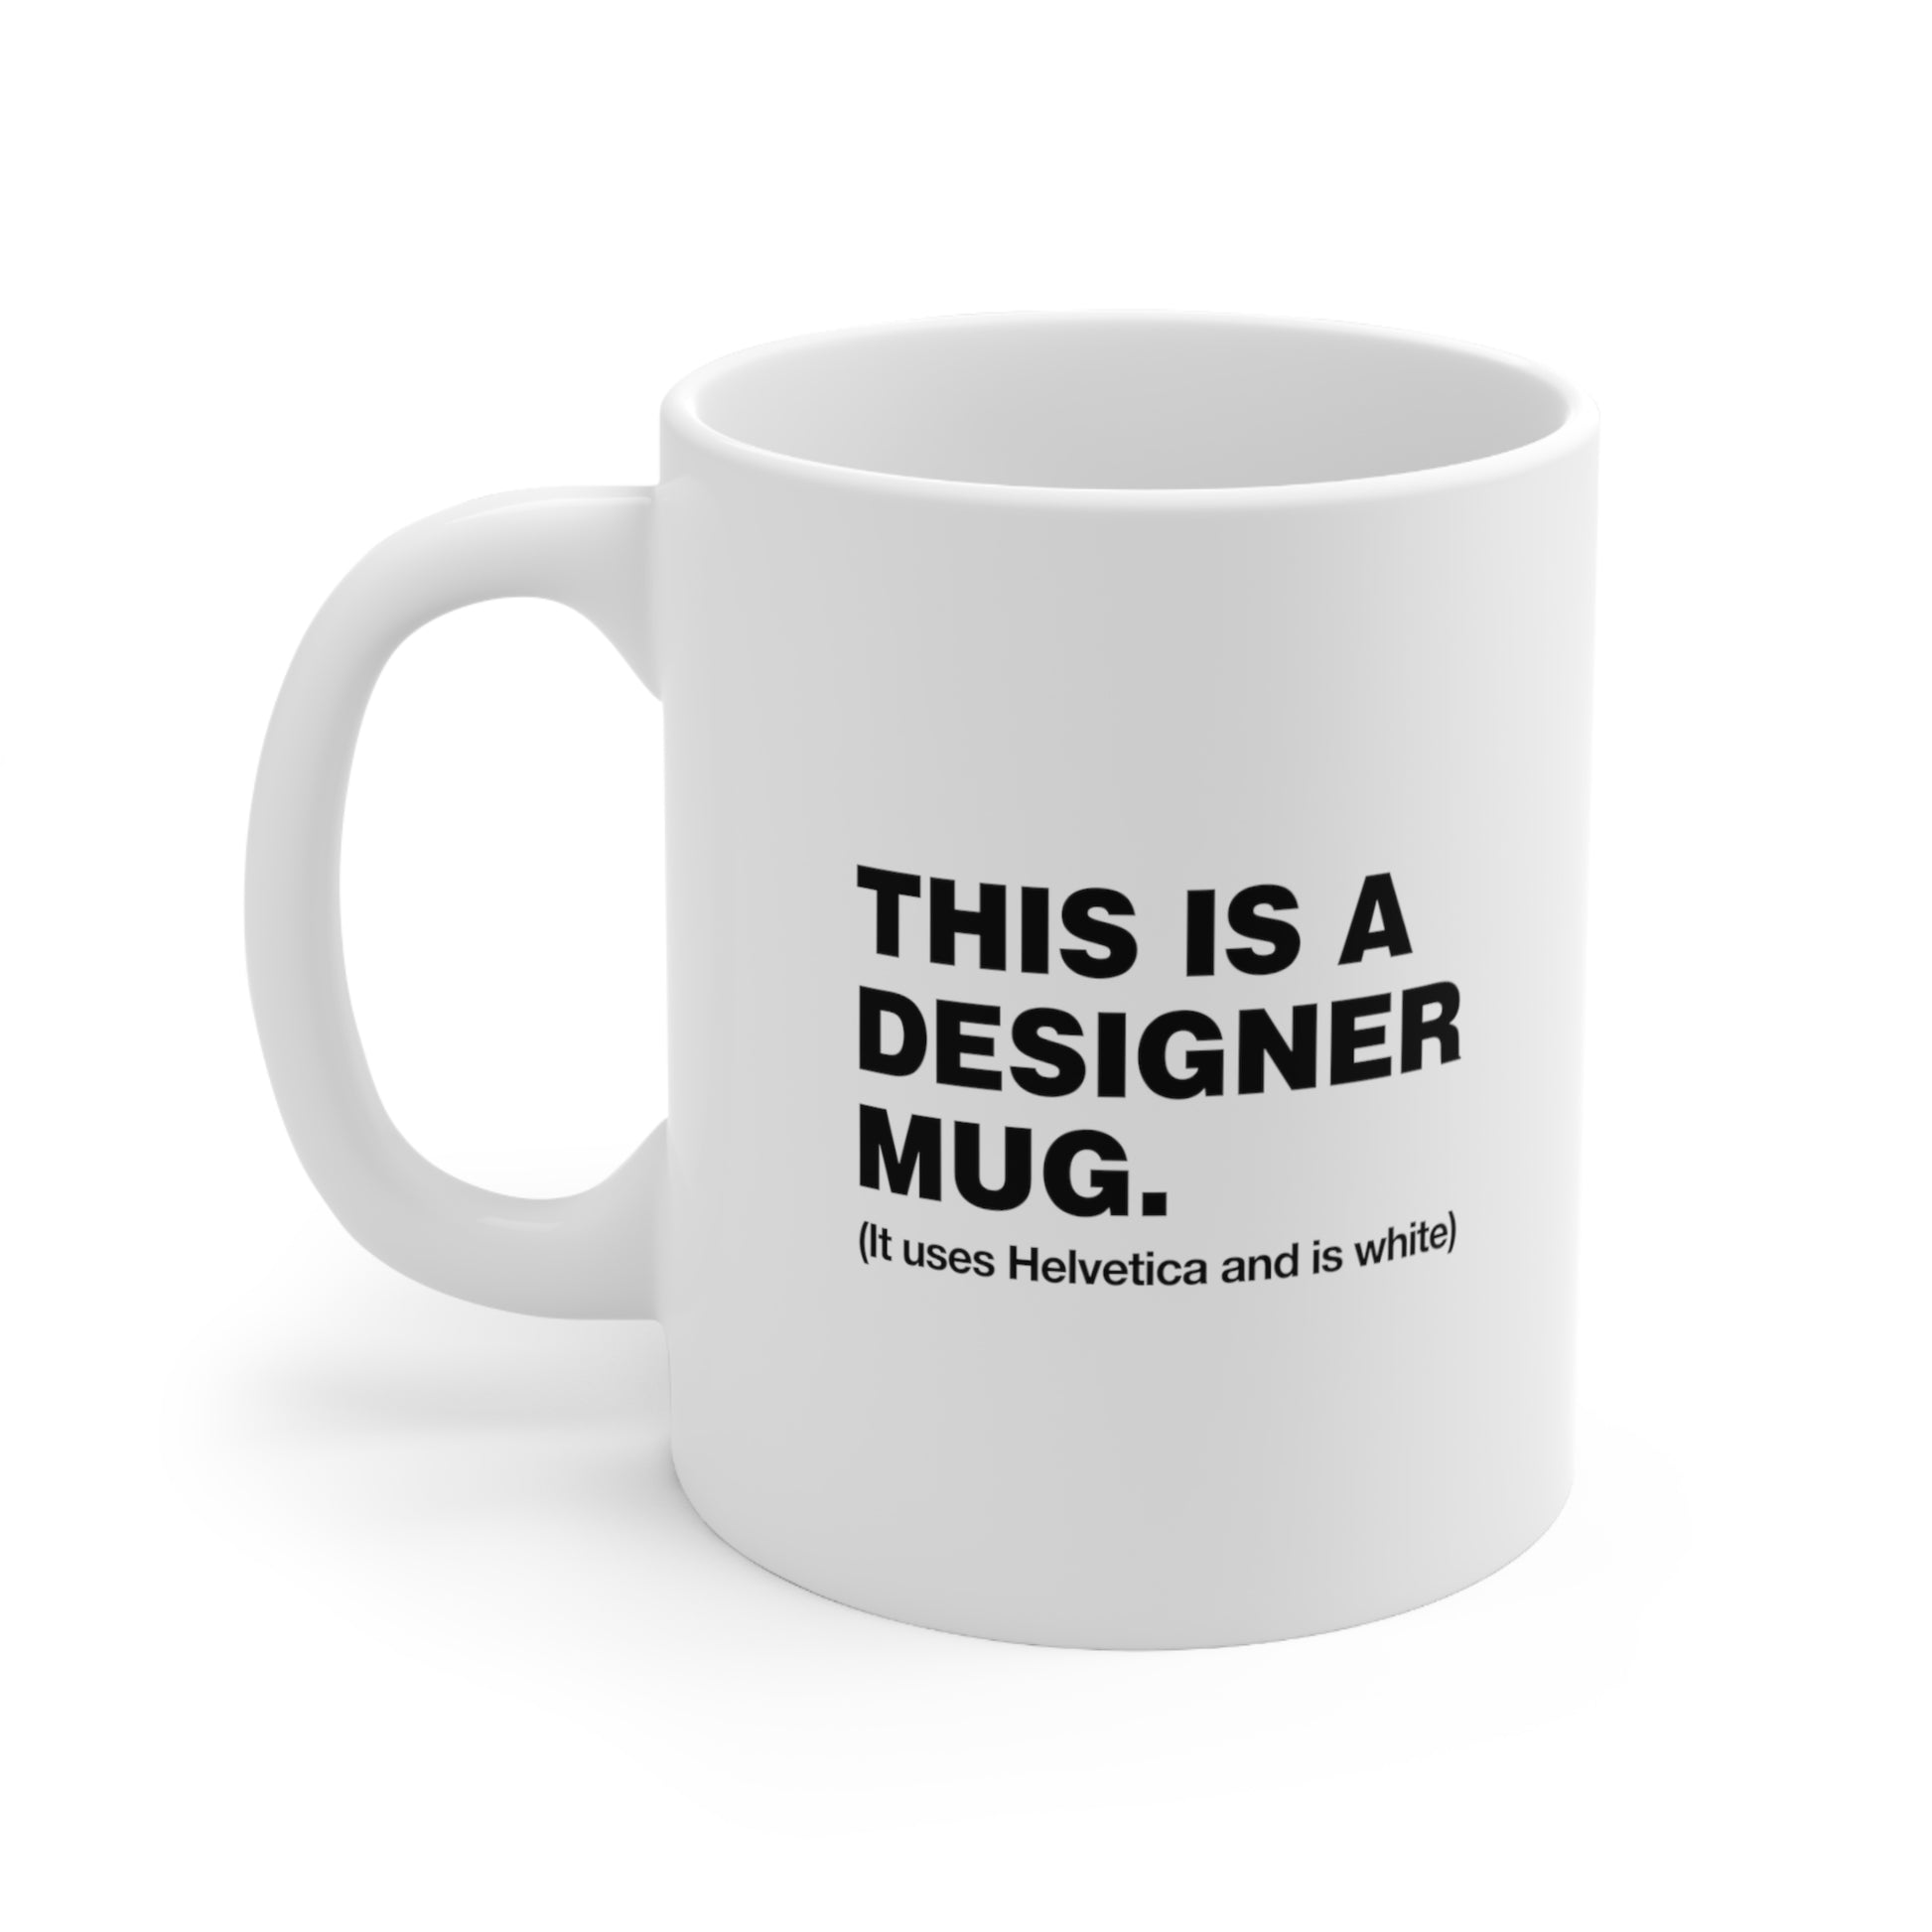 This is a designer mug 